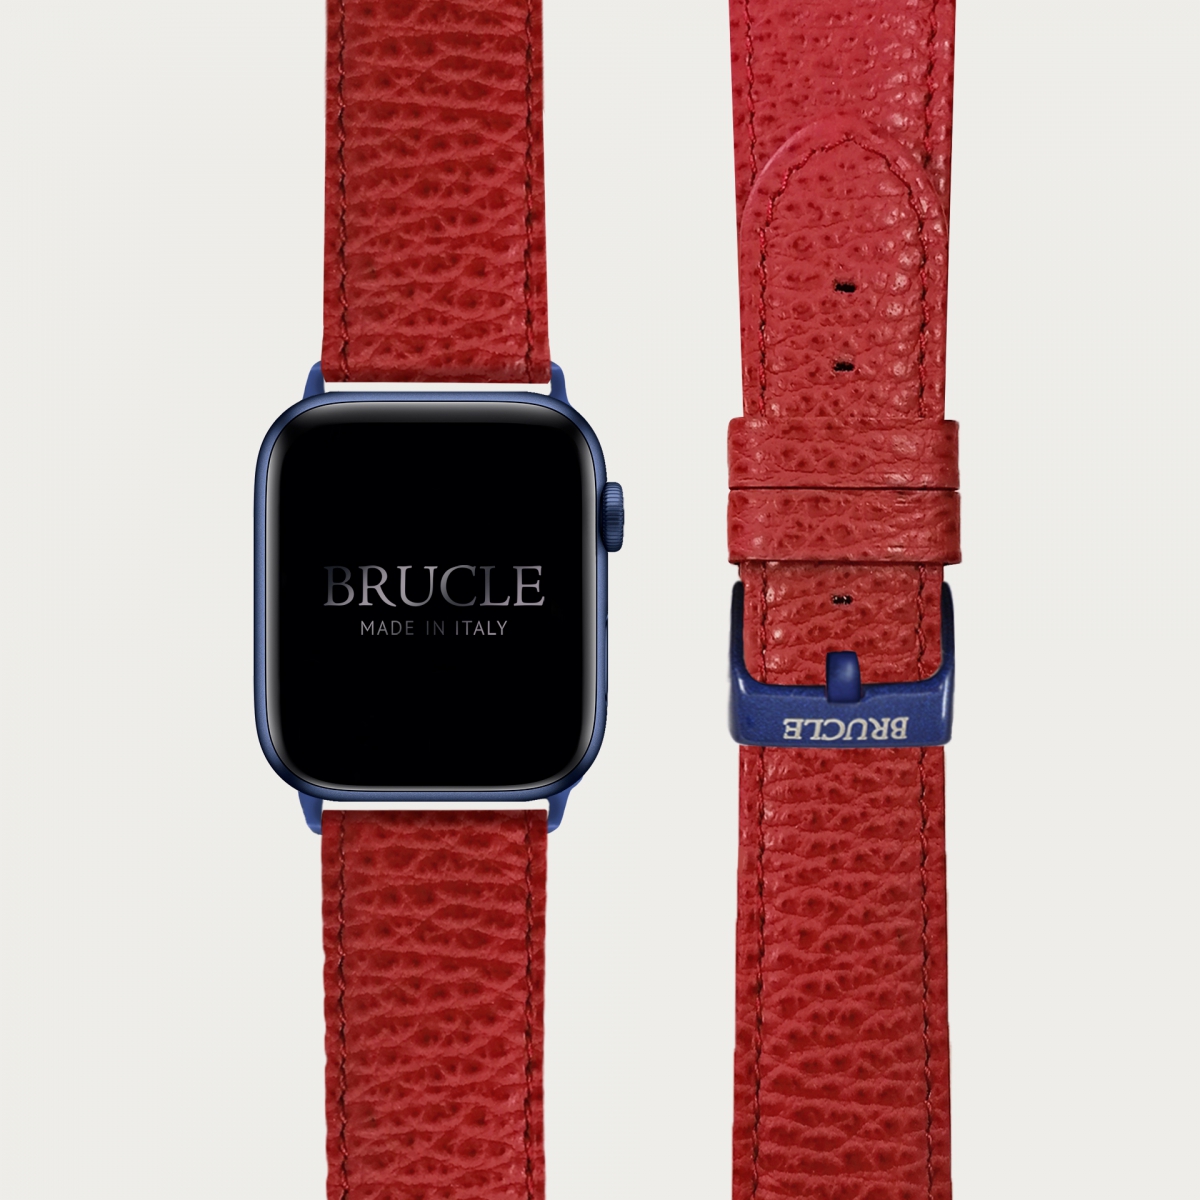 Armband kompatibel mit Apple Watch / Samsung Smartwatch, Rot, leder mit print